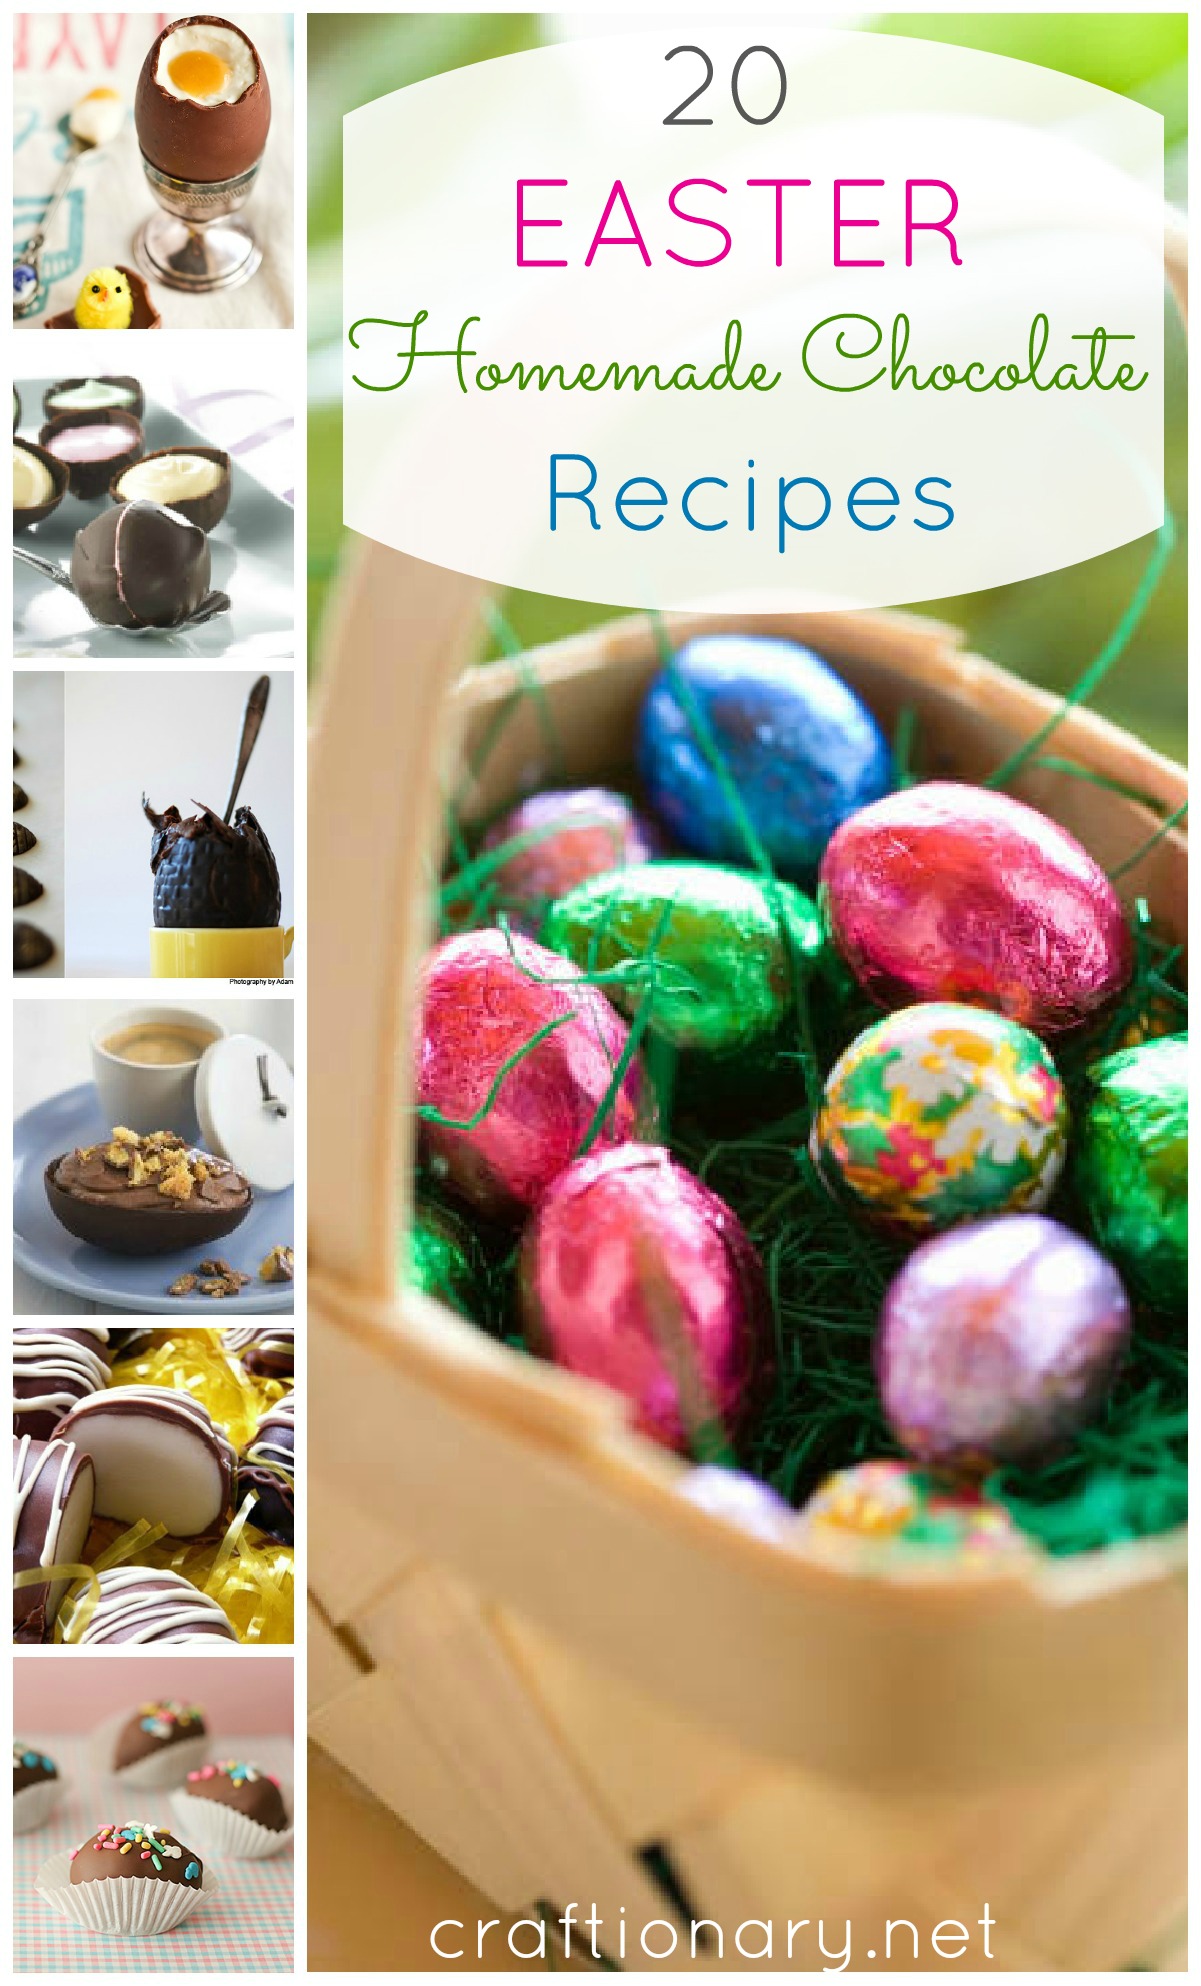 Homemade Chocolate Easter Eggs Recipe: How to Make It